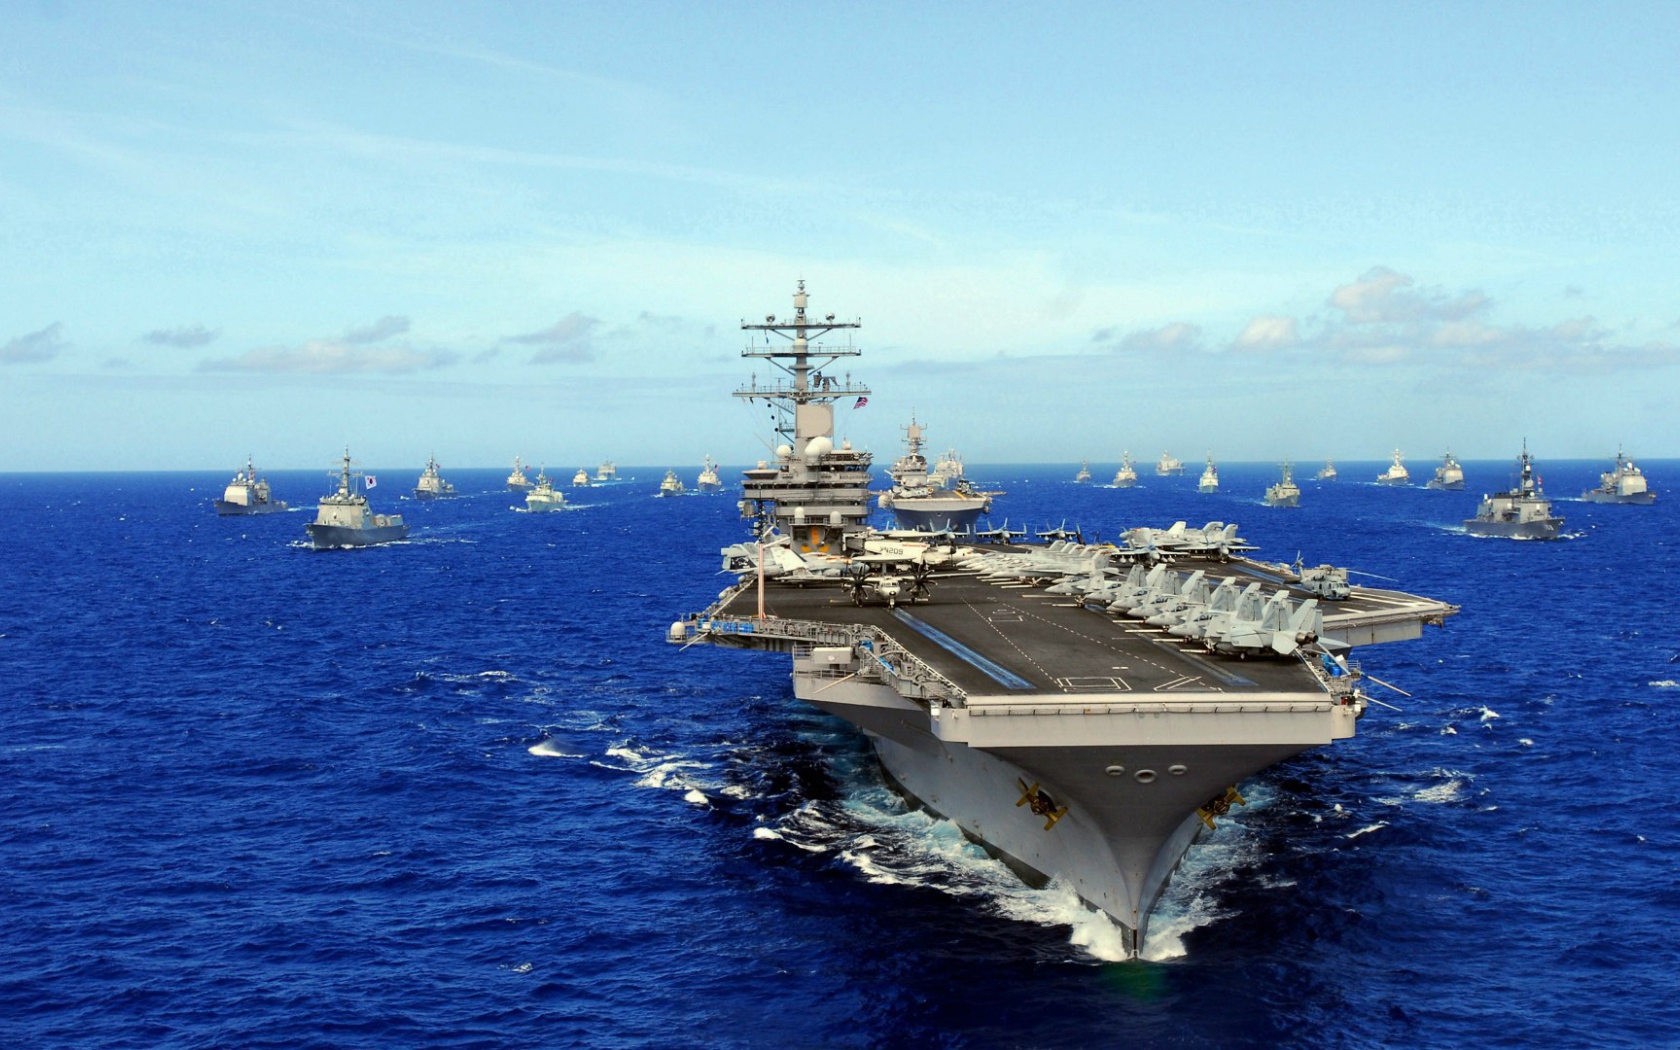 The aircraft carrier USS Ronald Reagan